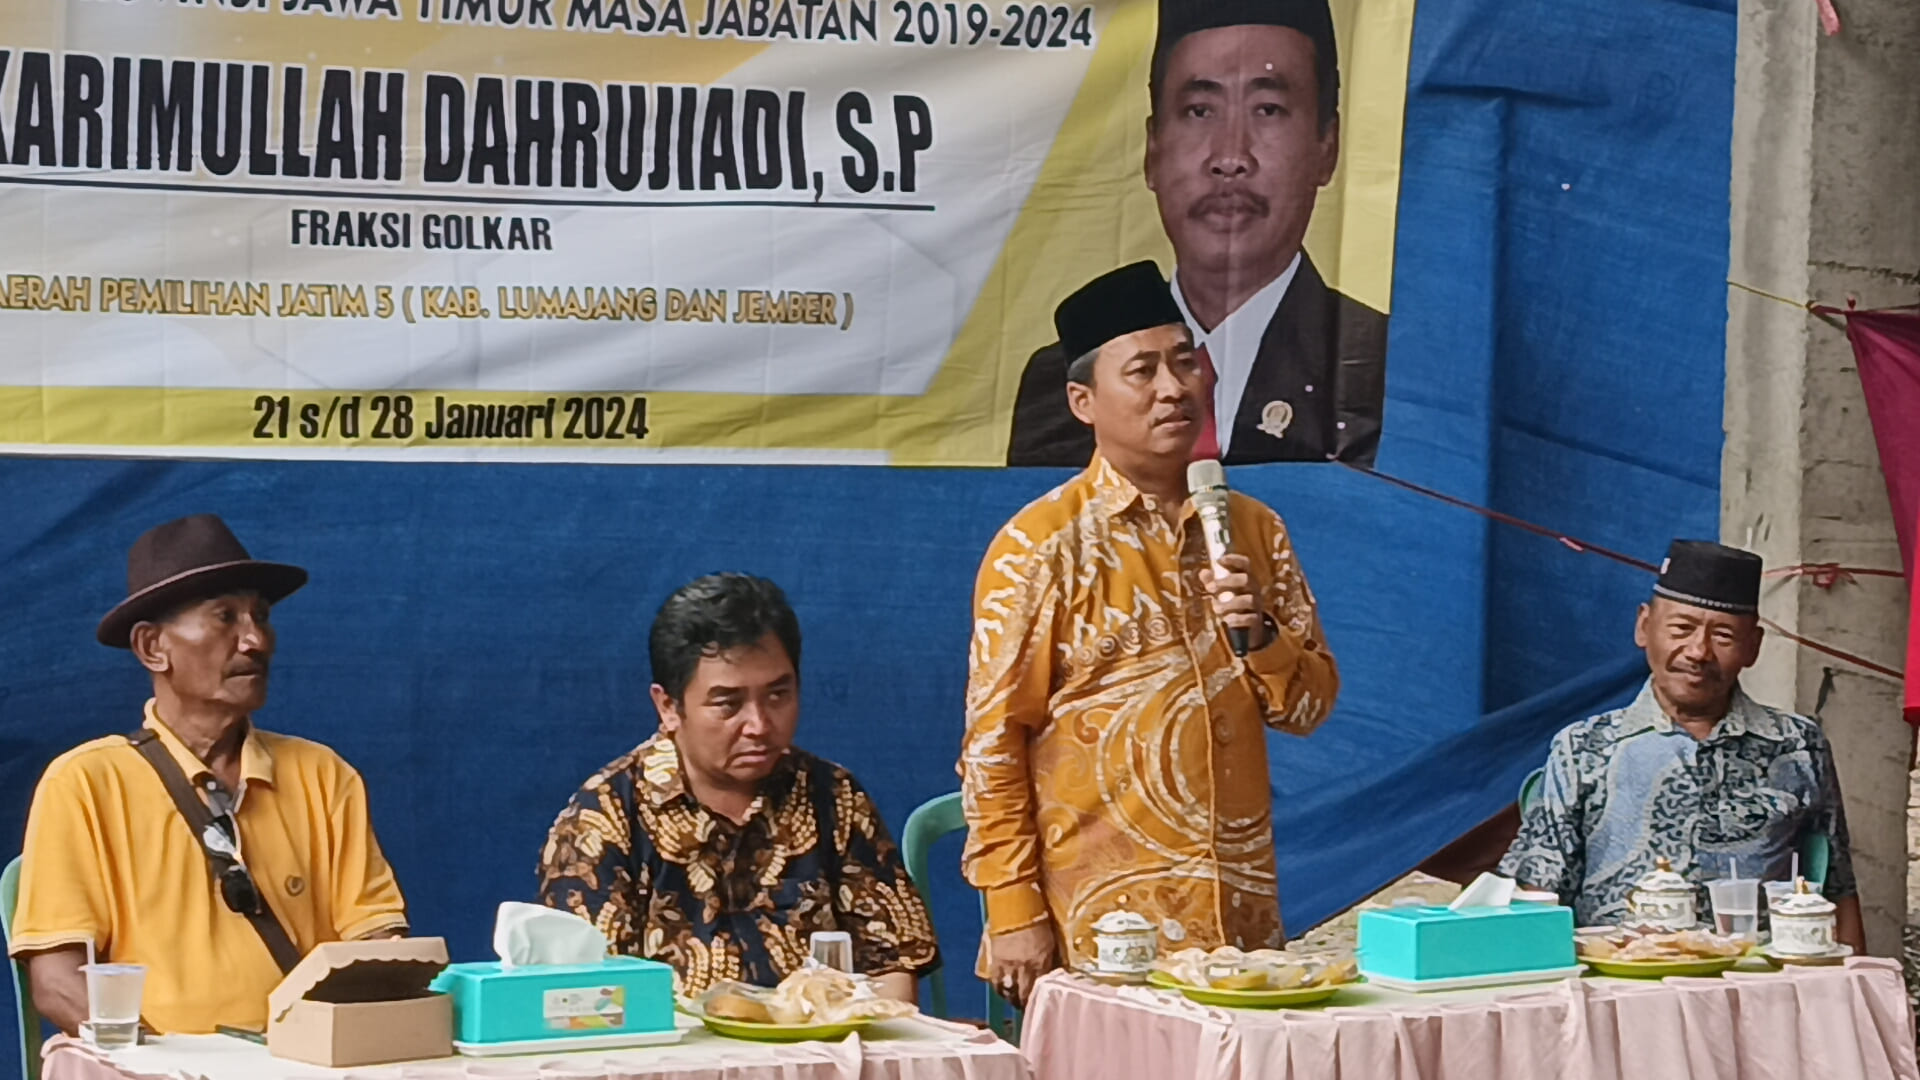 Anggota DPRD Jawa Timur, Karimullah Dahrujiadi